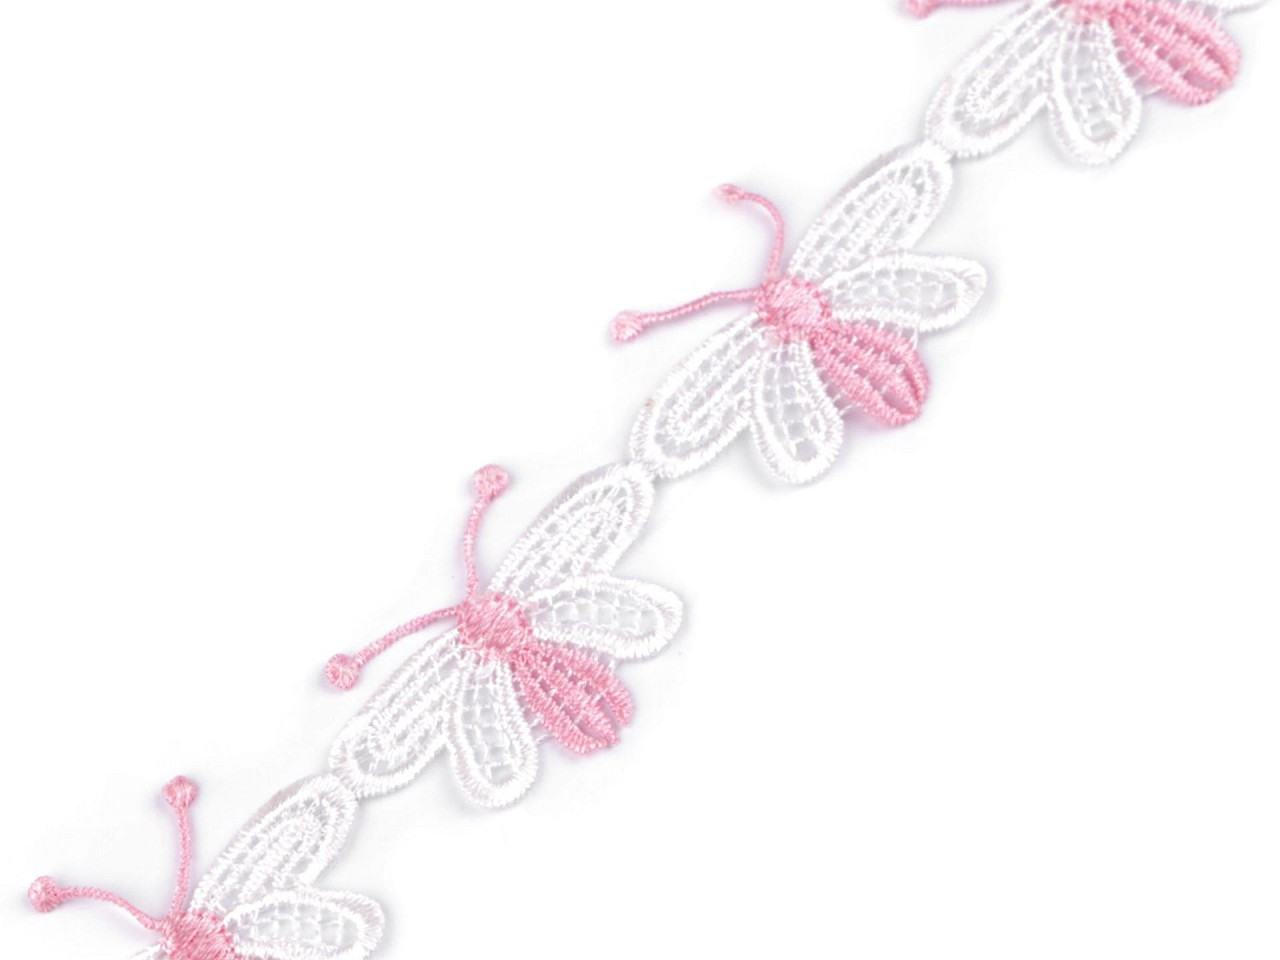 Vzdušná krajka motýl šíře 40 mm, barva 2 růžová sv. bílá